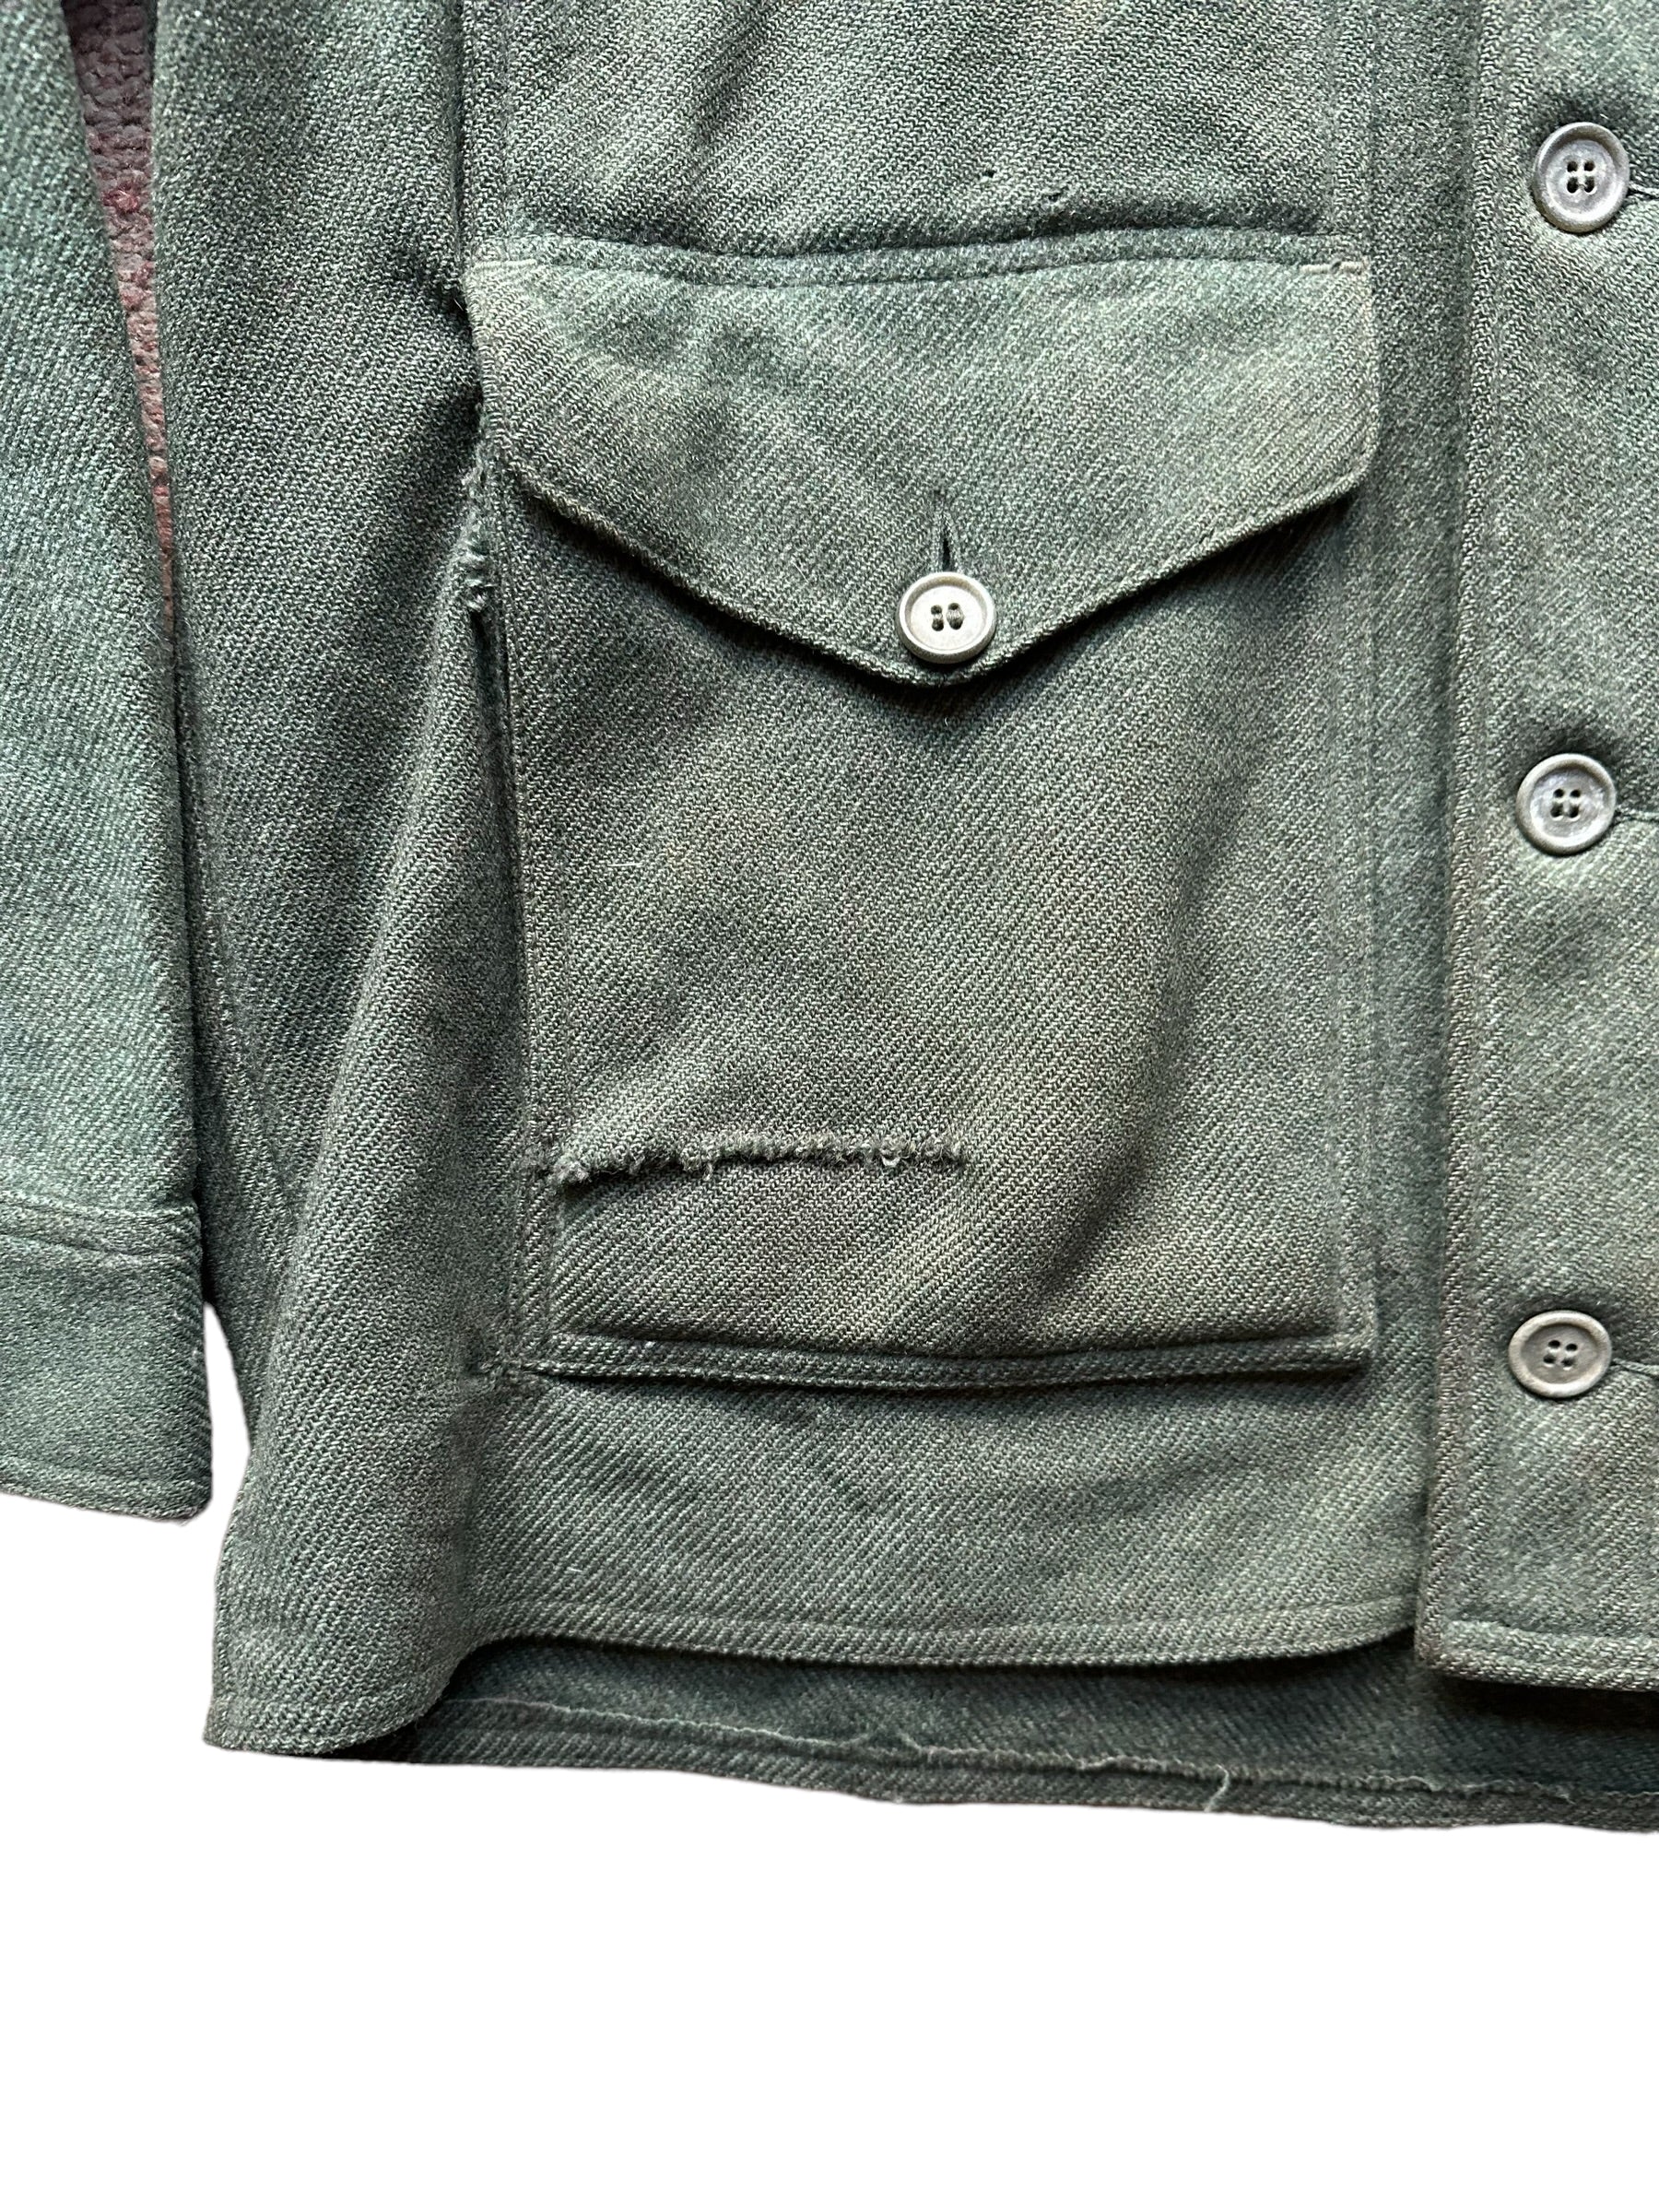 Repaired Front Pocket Detail on Vintage Early 70s Filson Herringbone Green Cape Coat SZ 46 |  Vintage Filson Cape Coat | Vintage Workwear Seattle